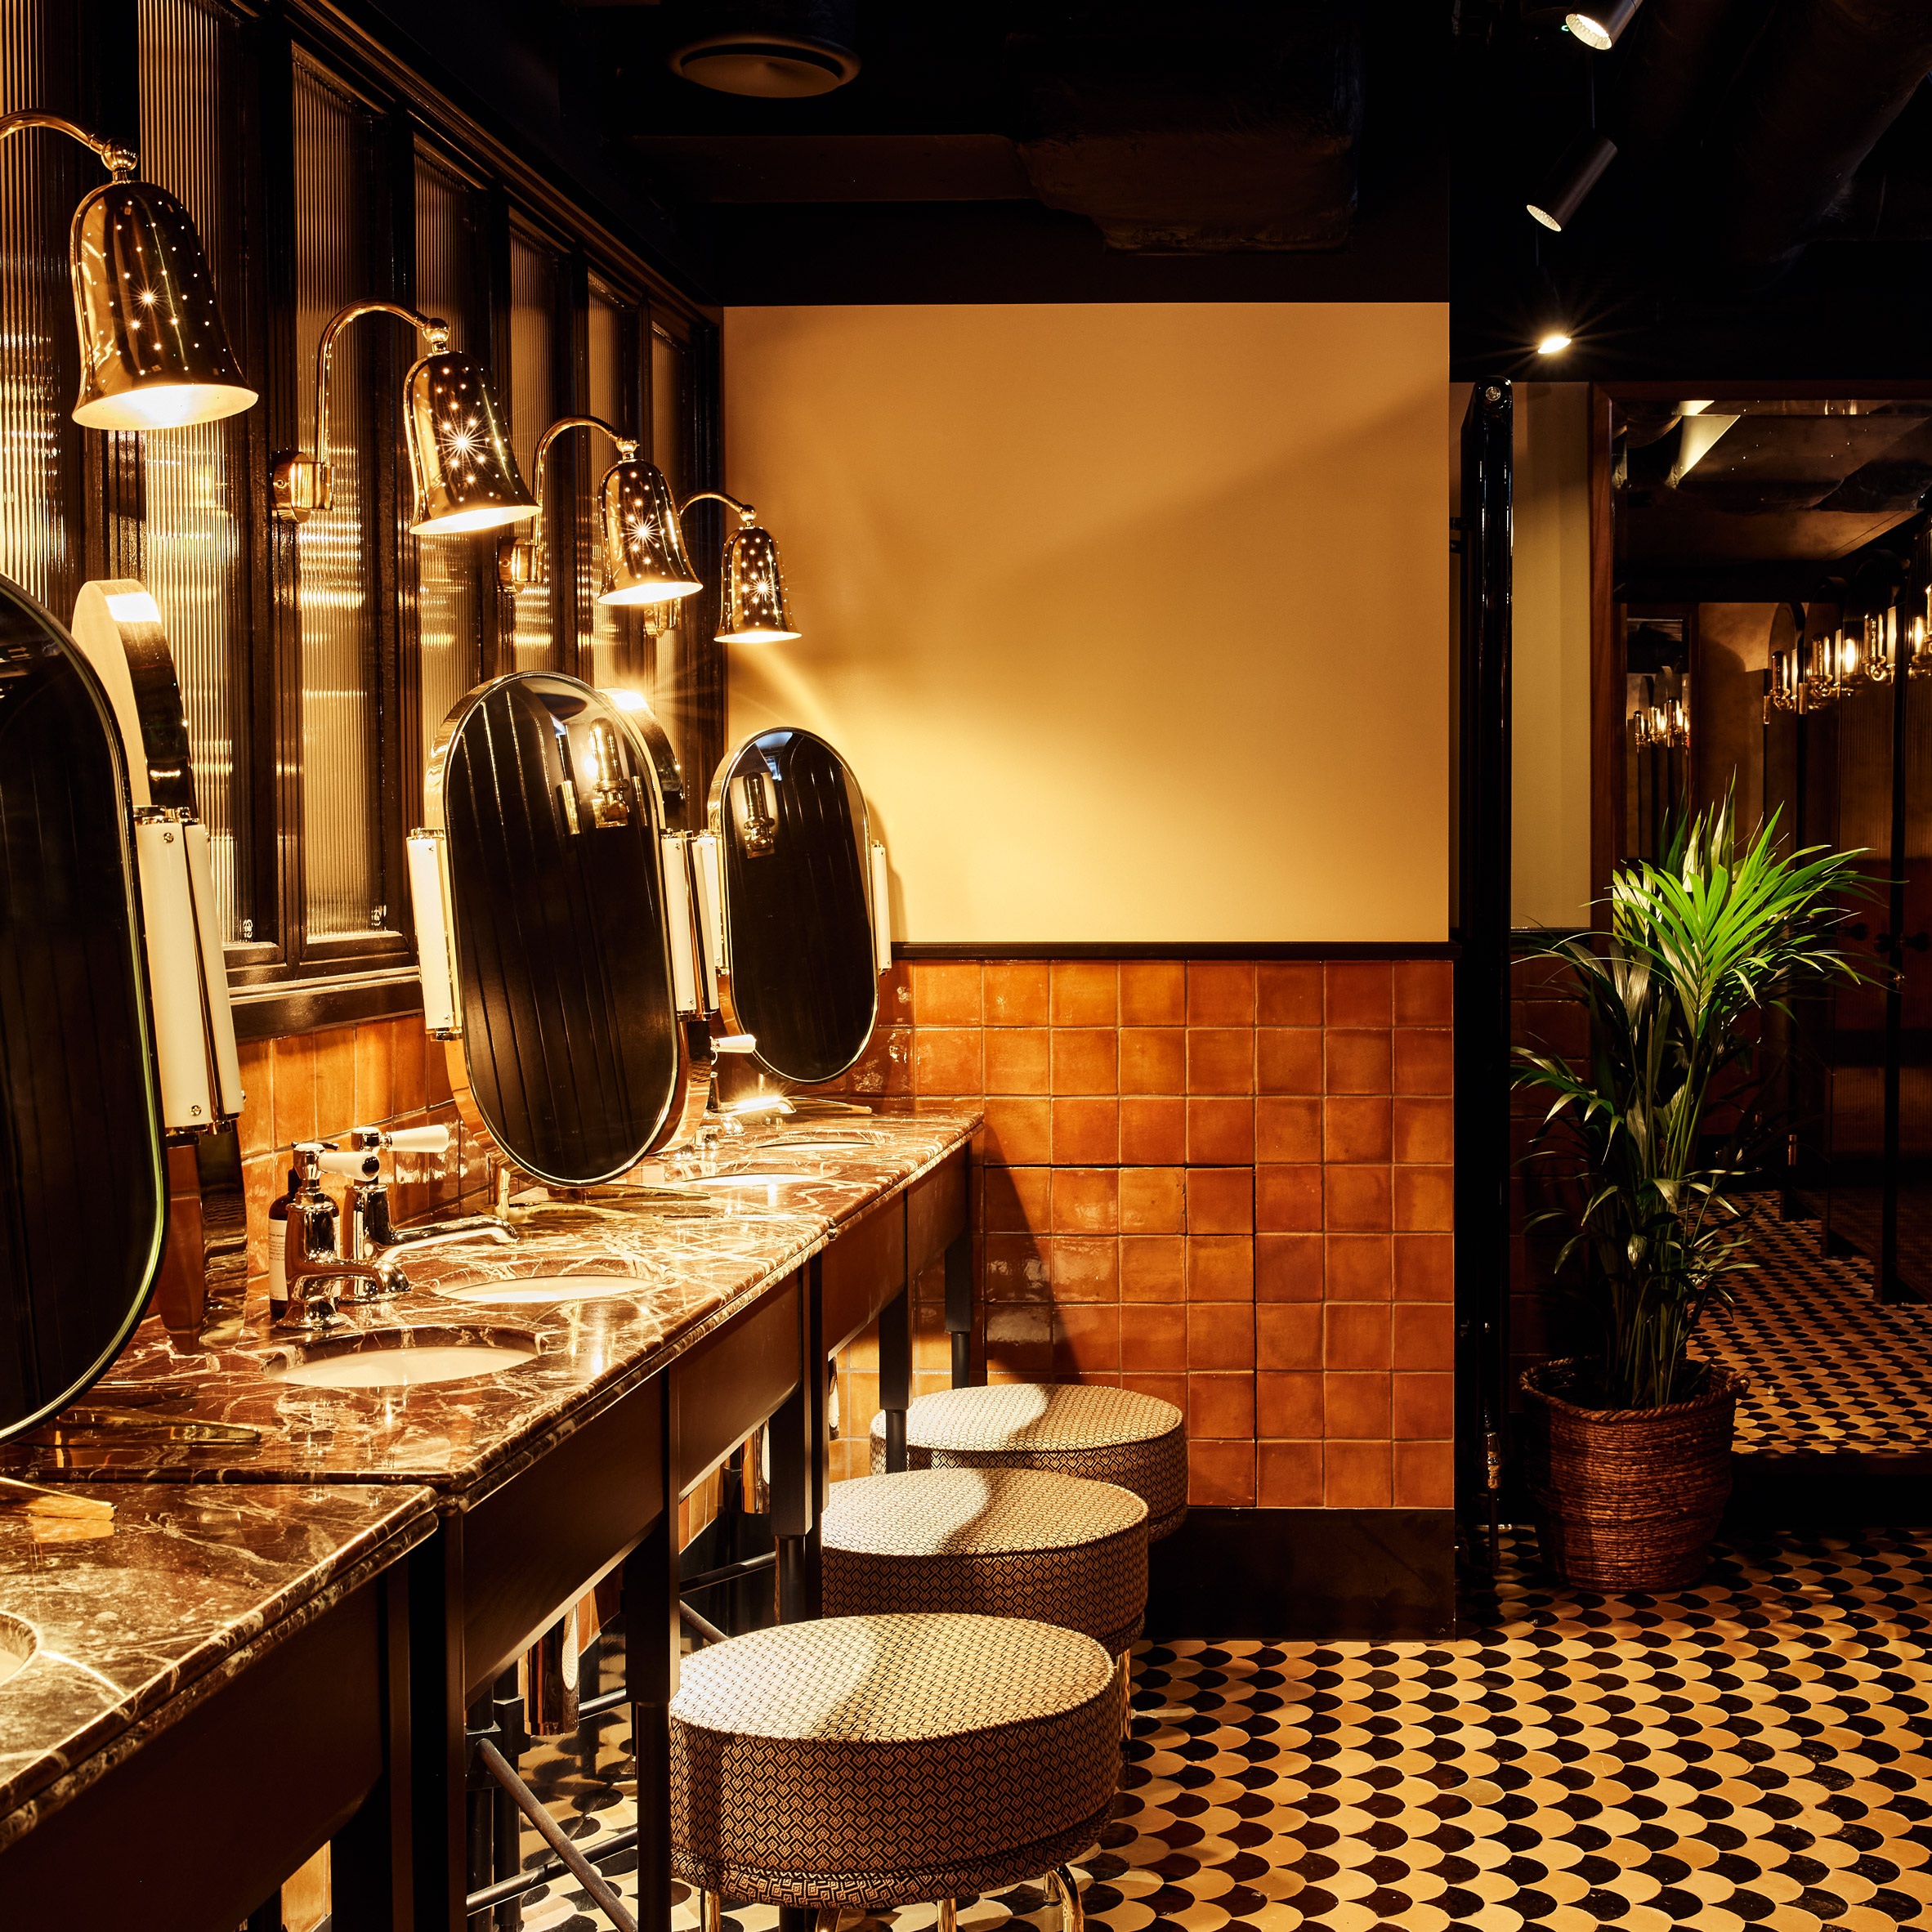 Secret Room Club, Dubai - Nightclub Interior Design on Love That